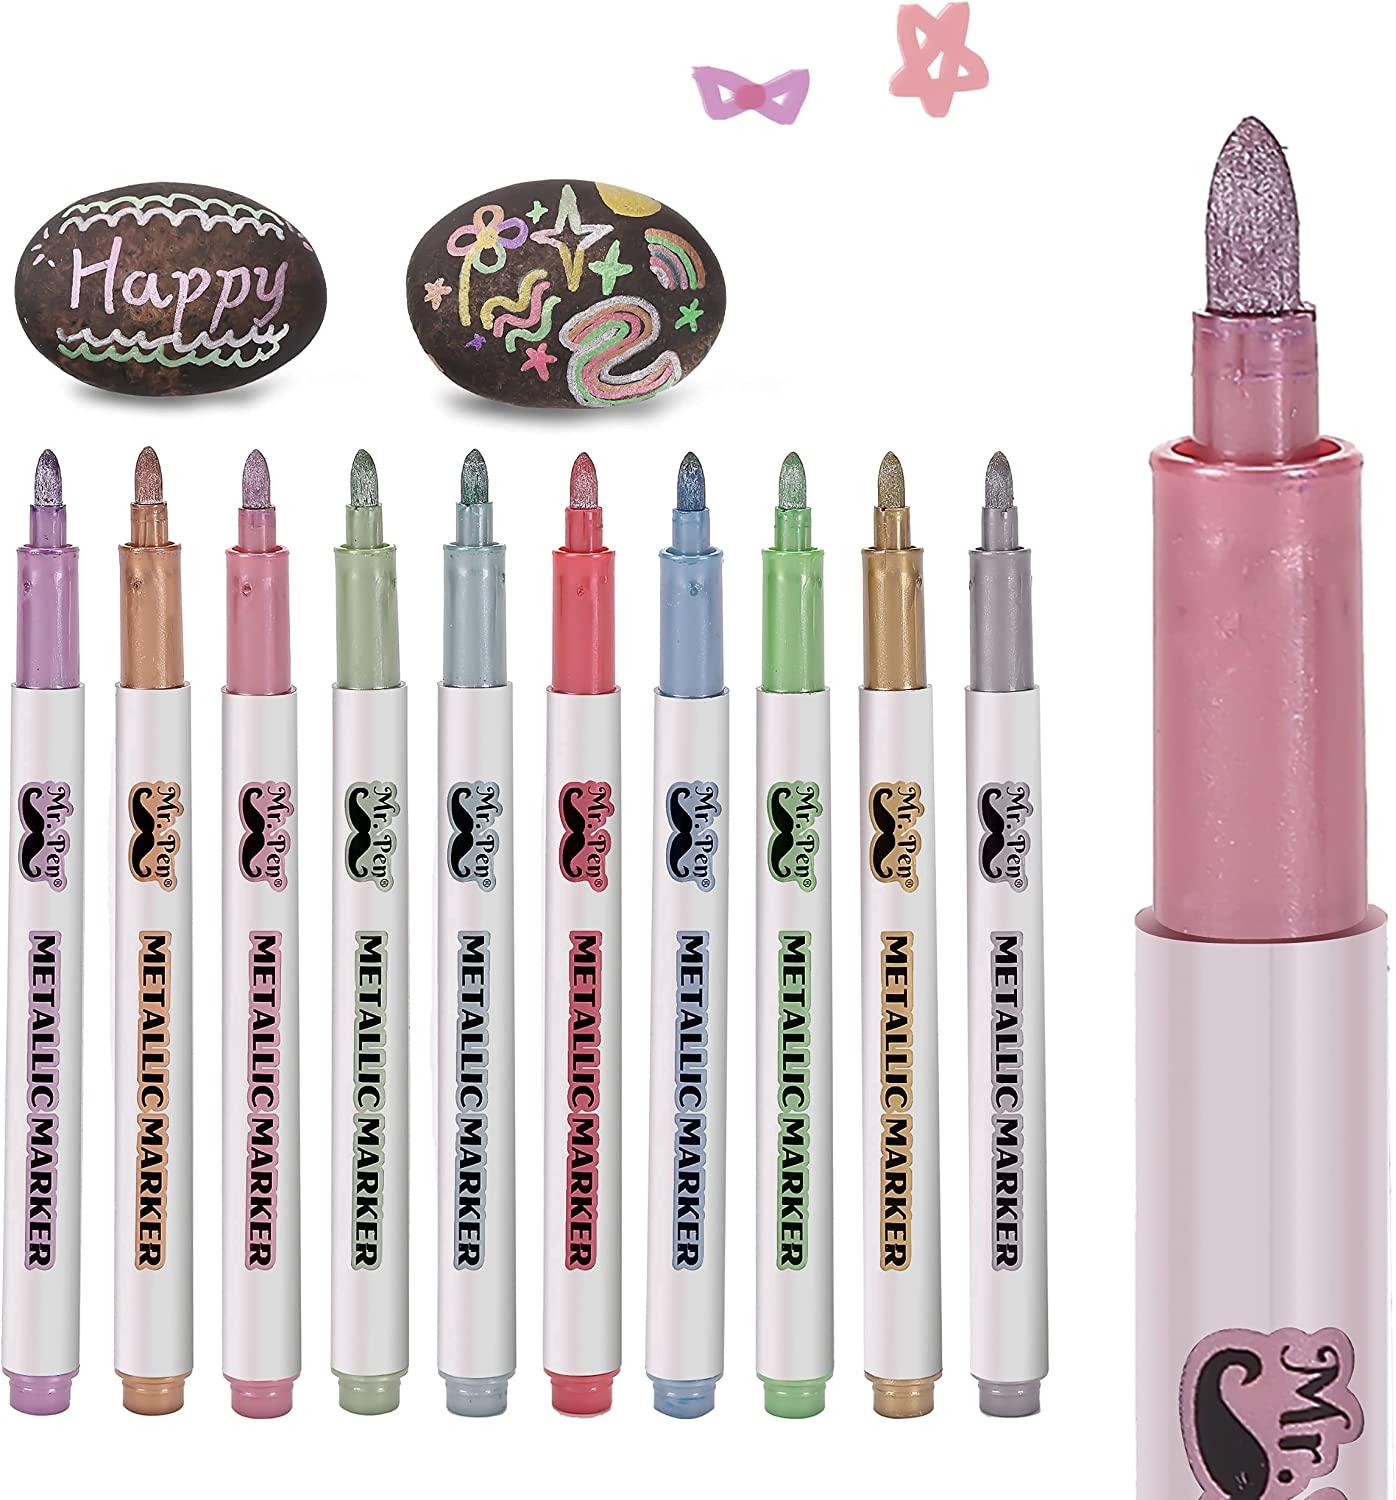 Mr. Pen- Metallic Paint Markers, 6 Pack - Mr. Pen Store